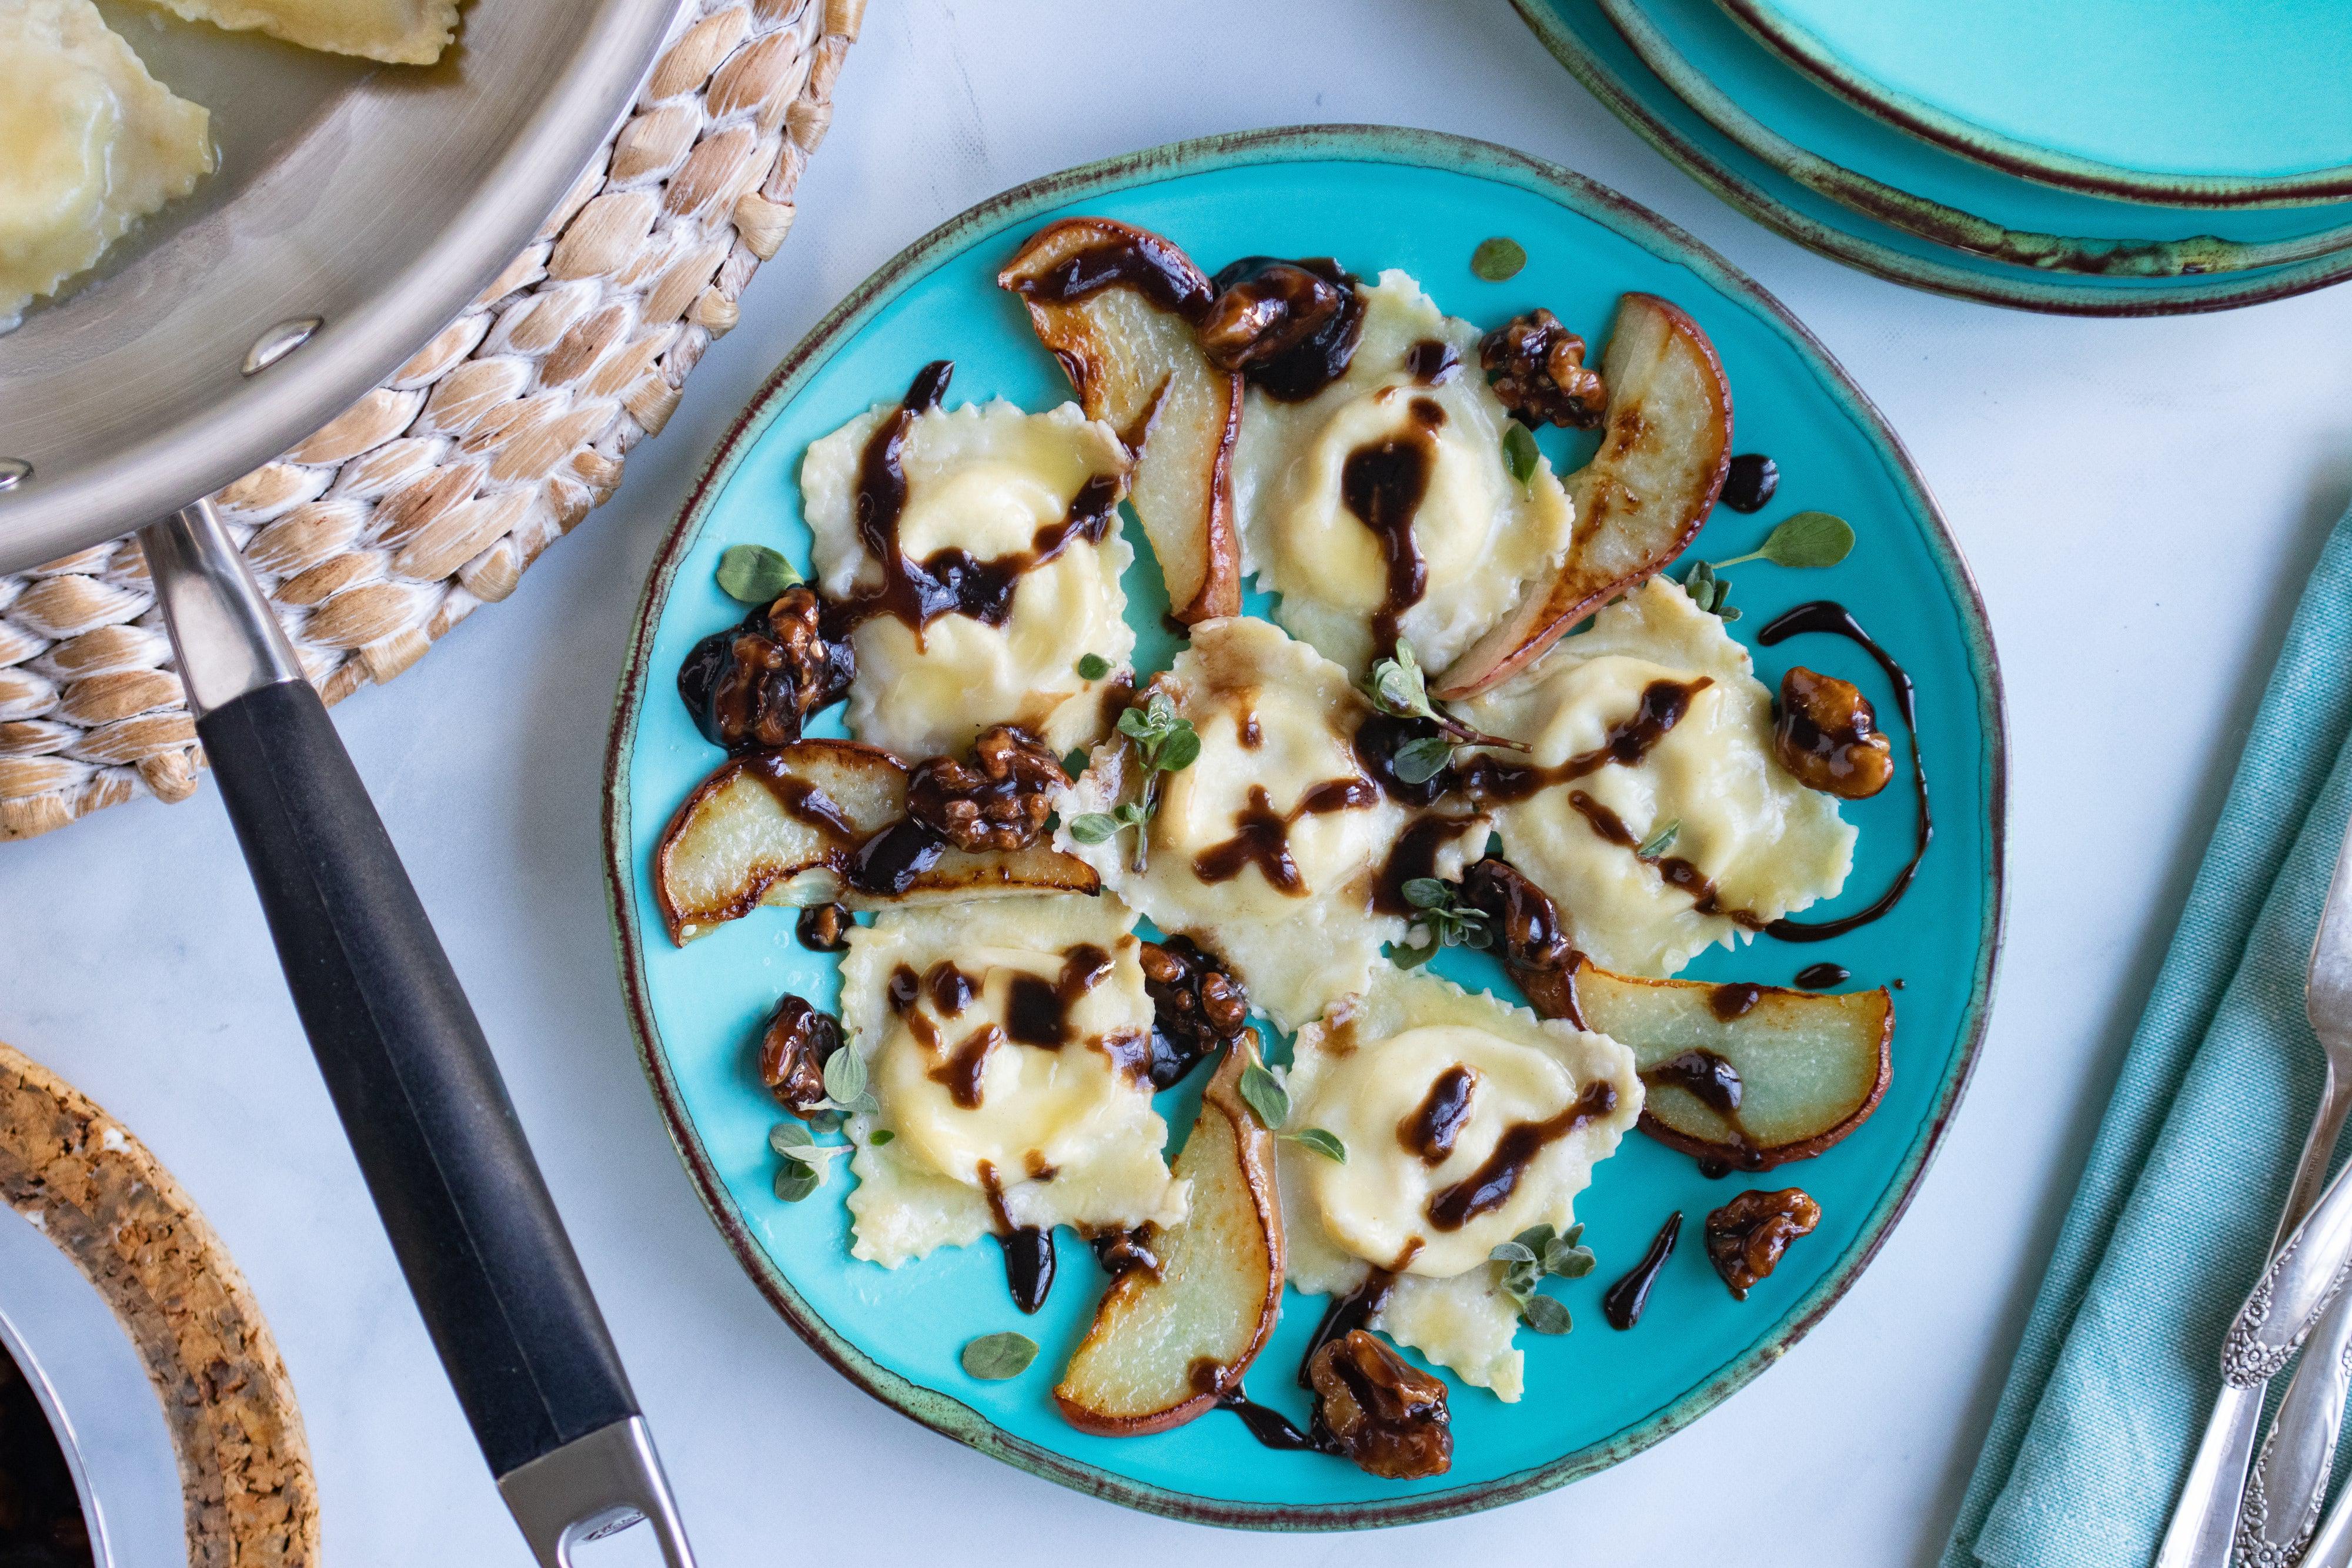 Homemade Pear and Gorgonzola Ravioli Recipe